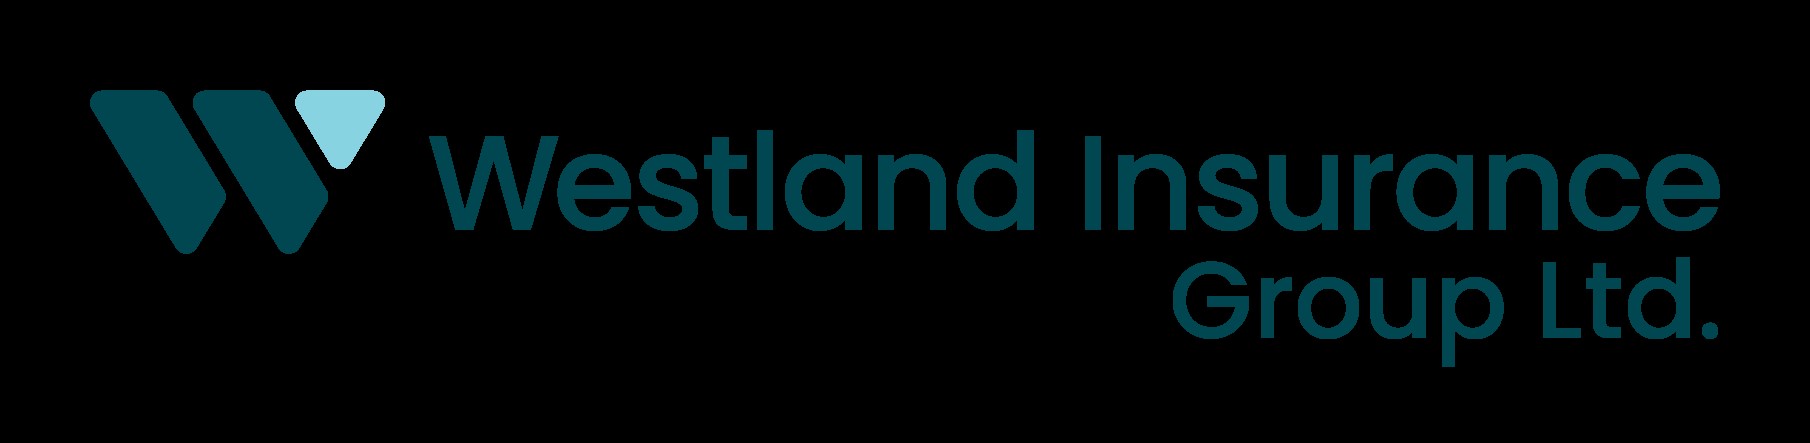 Westland Insurance G